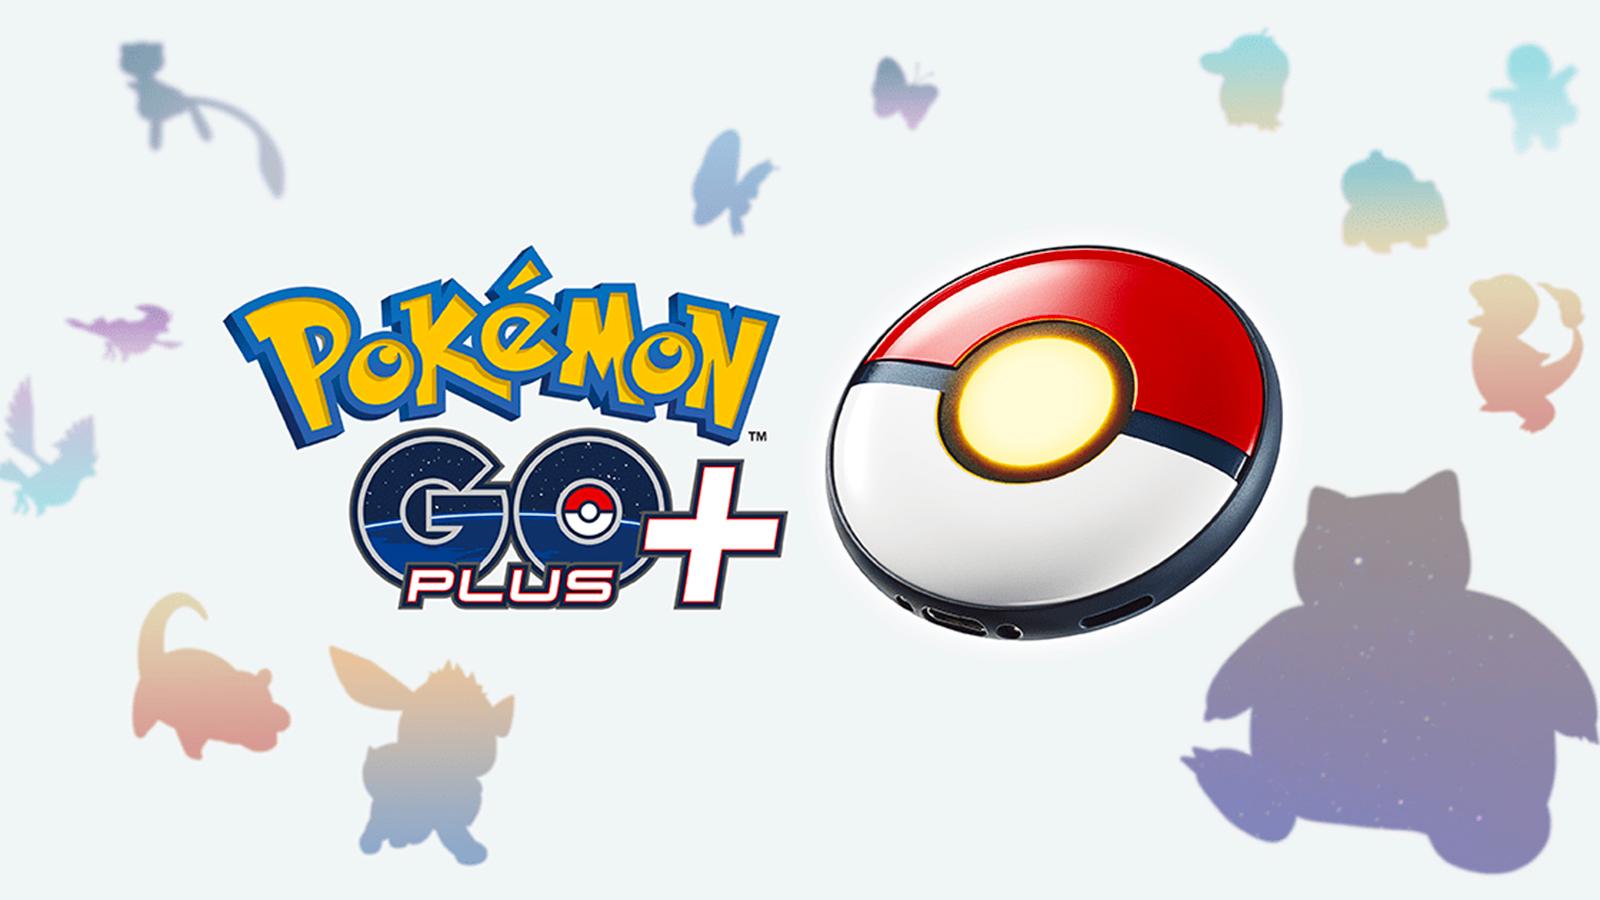 Where to buy Pokemon Go Plus+ Release date & Pokemon Go Plus